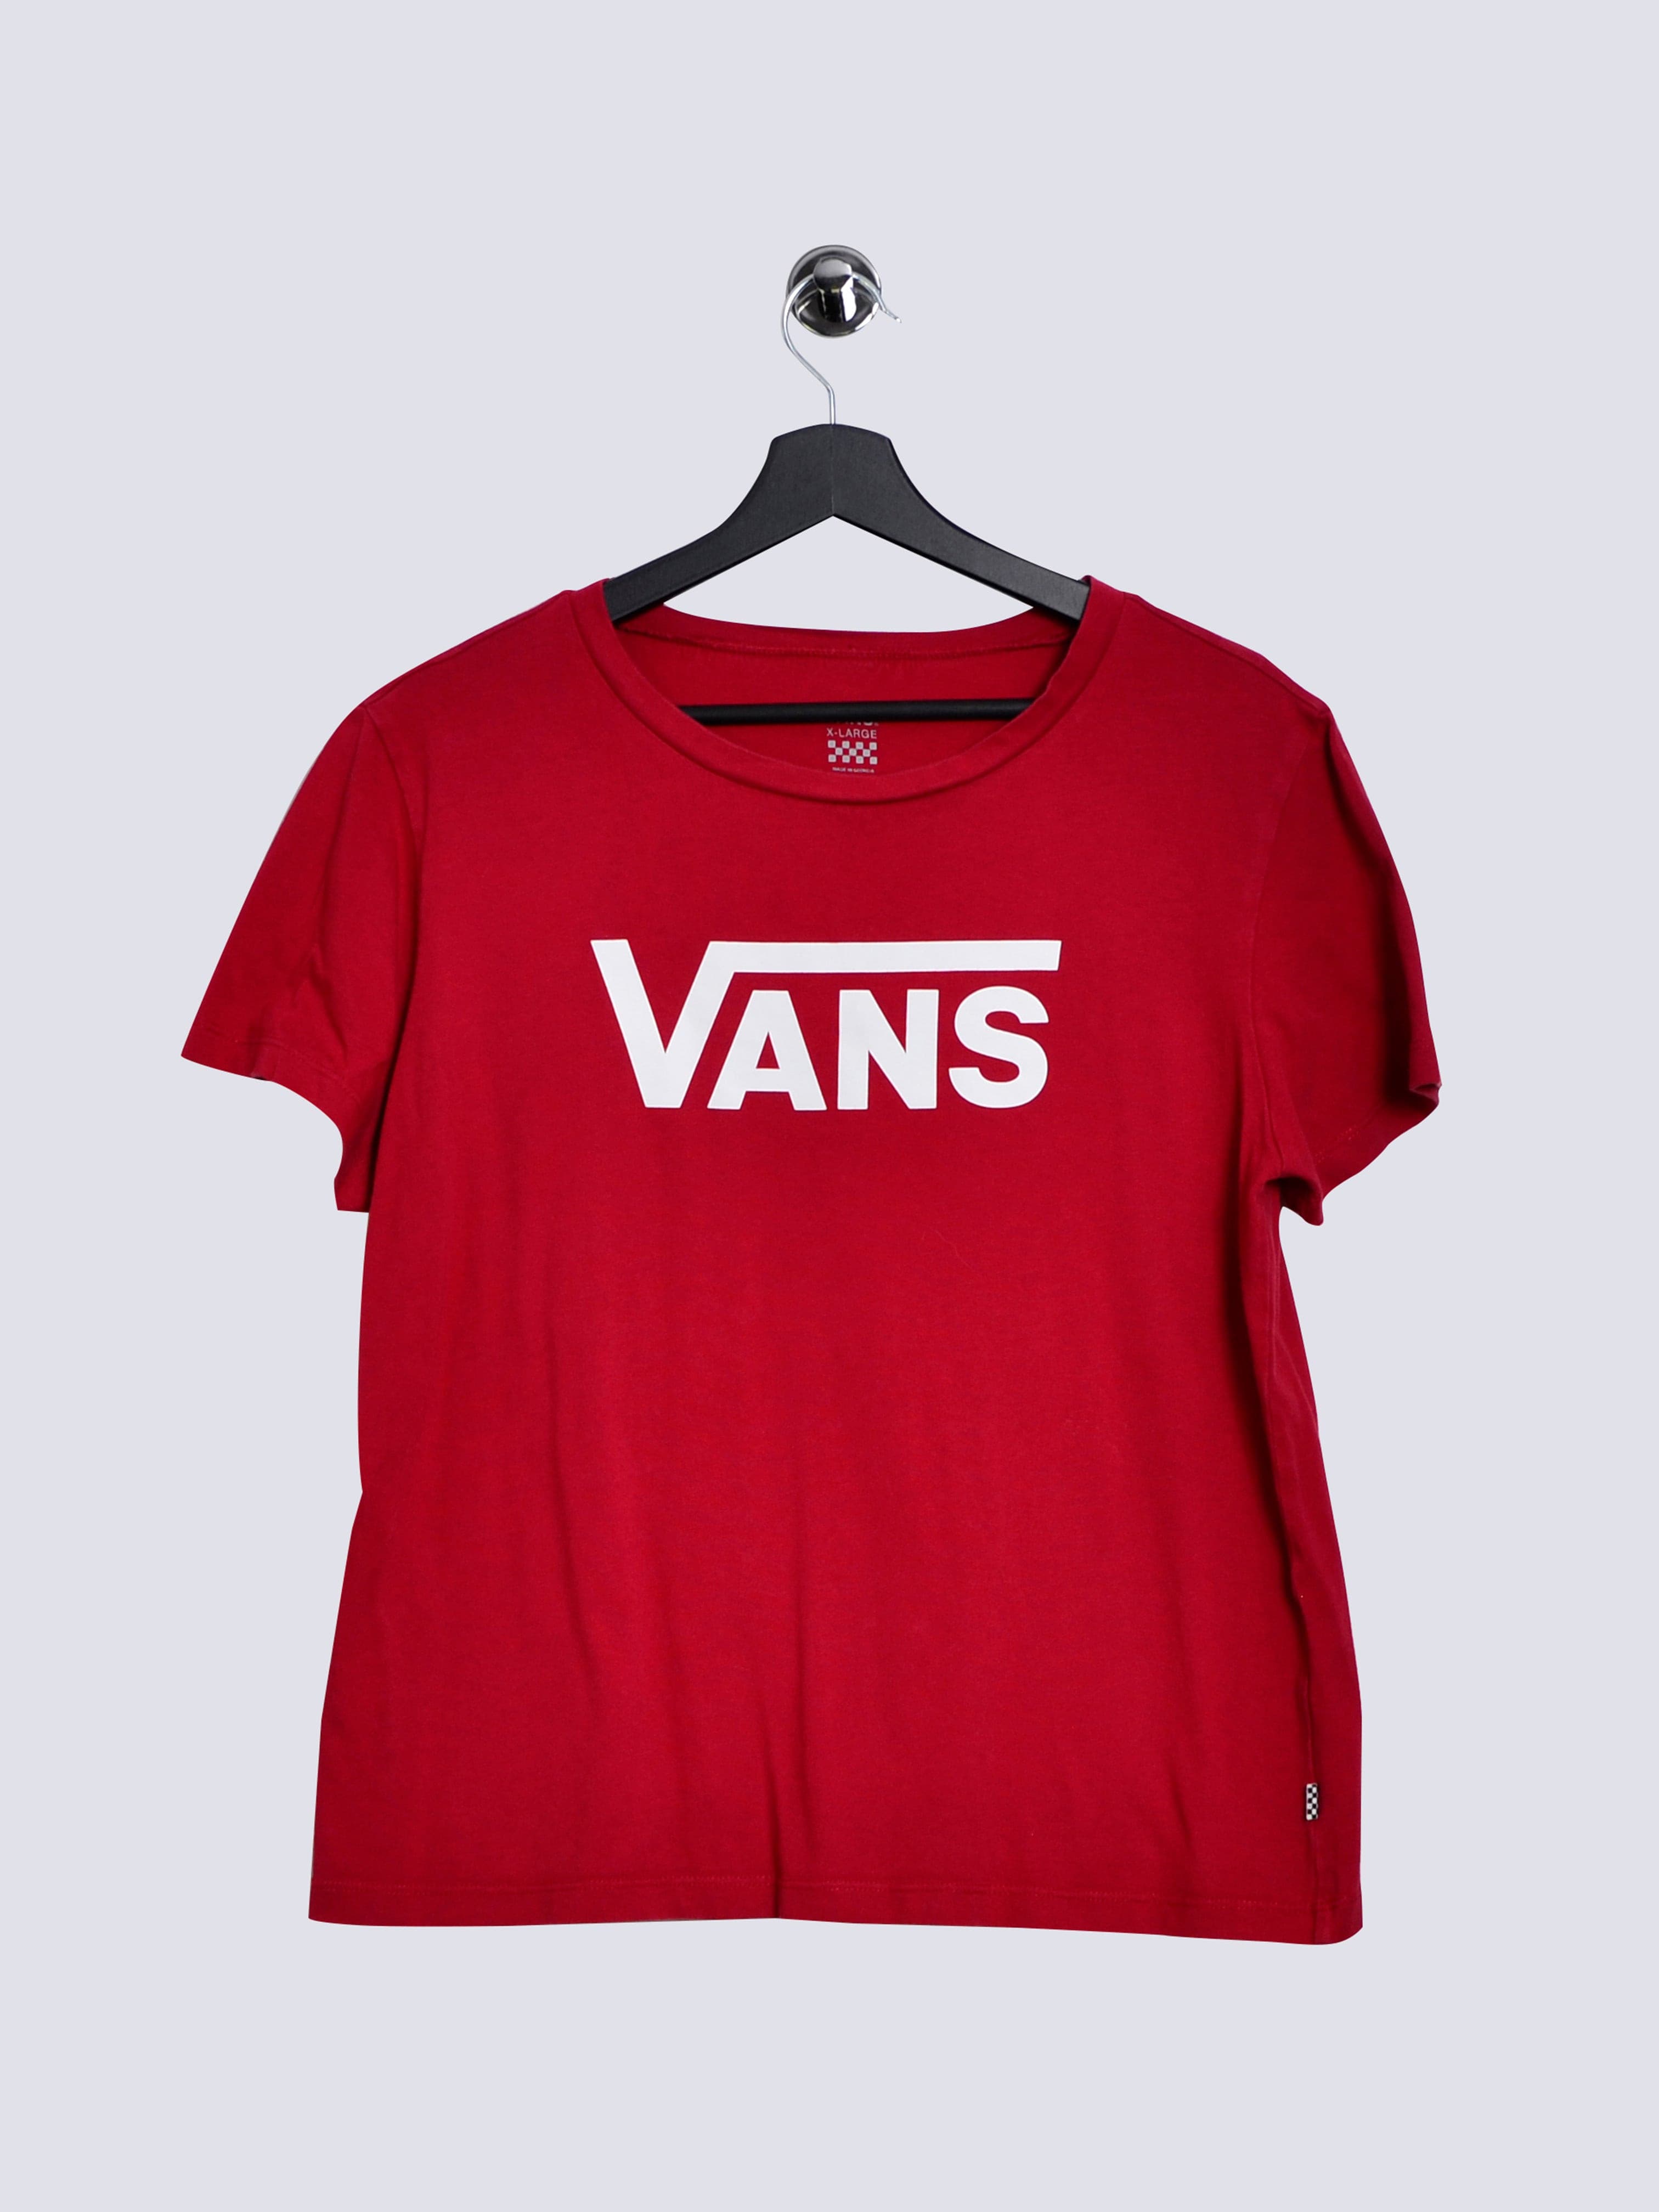 Vans Big Logo Womens Shirt Red // XXS - RHAGHOUSE VINTAGE